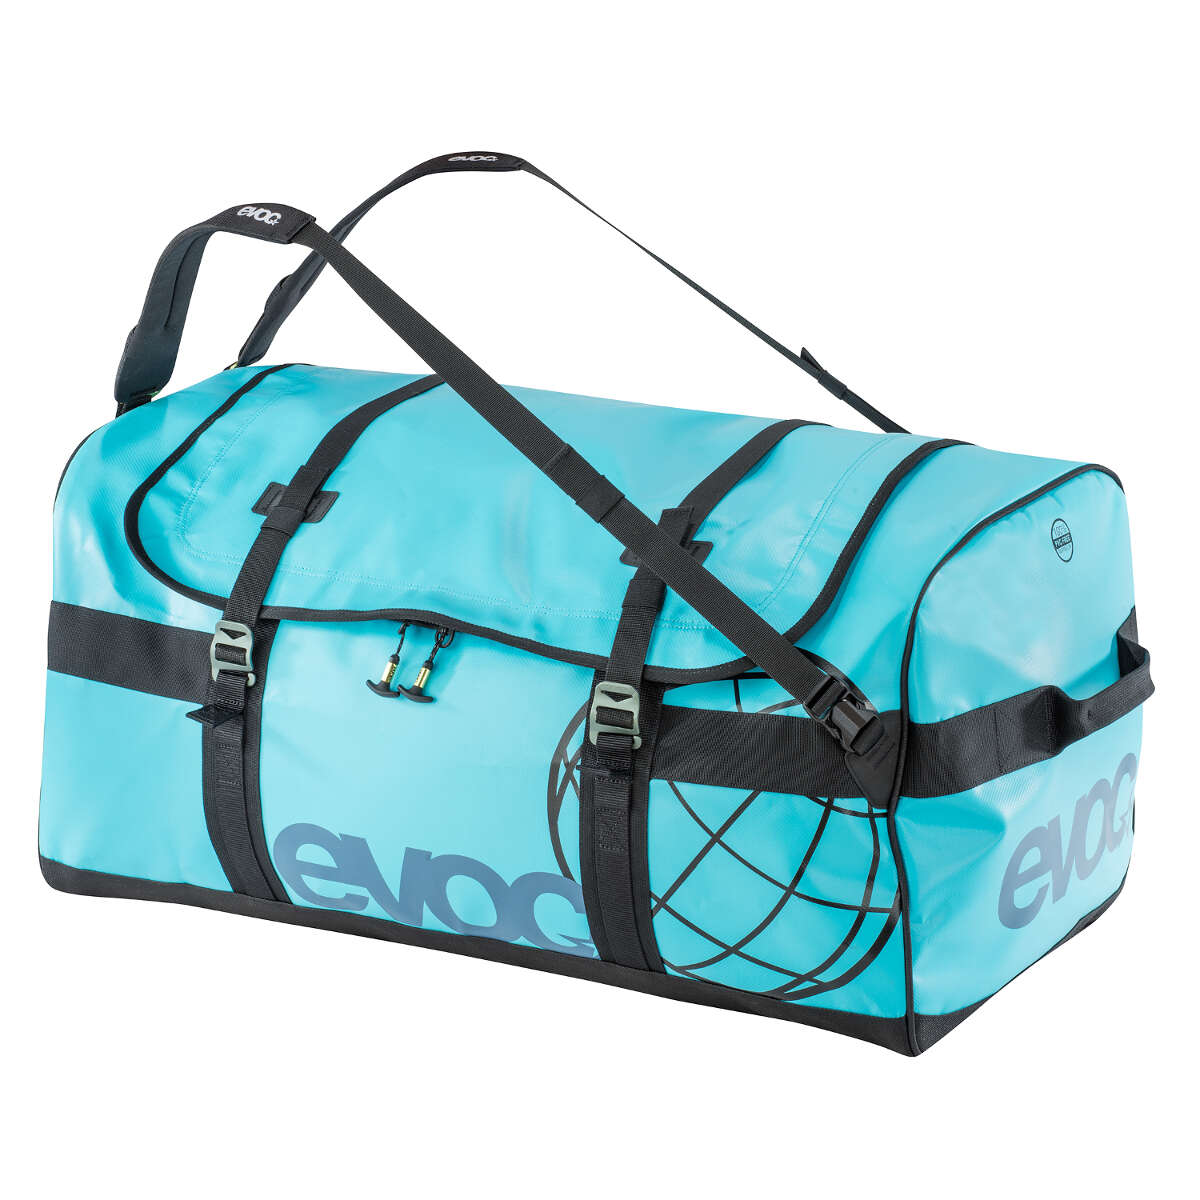 Evoc Sac de Voyage Duffle Bag Neon Bleu, 100 Litre